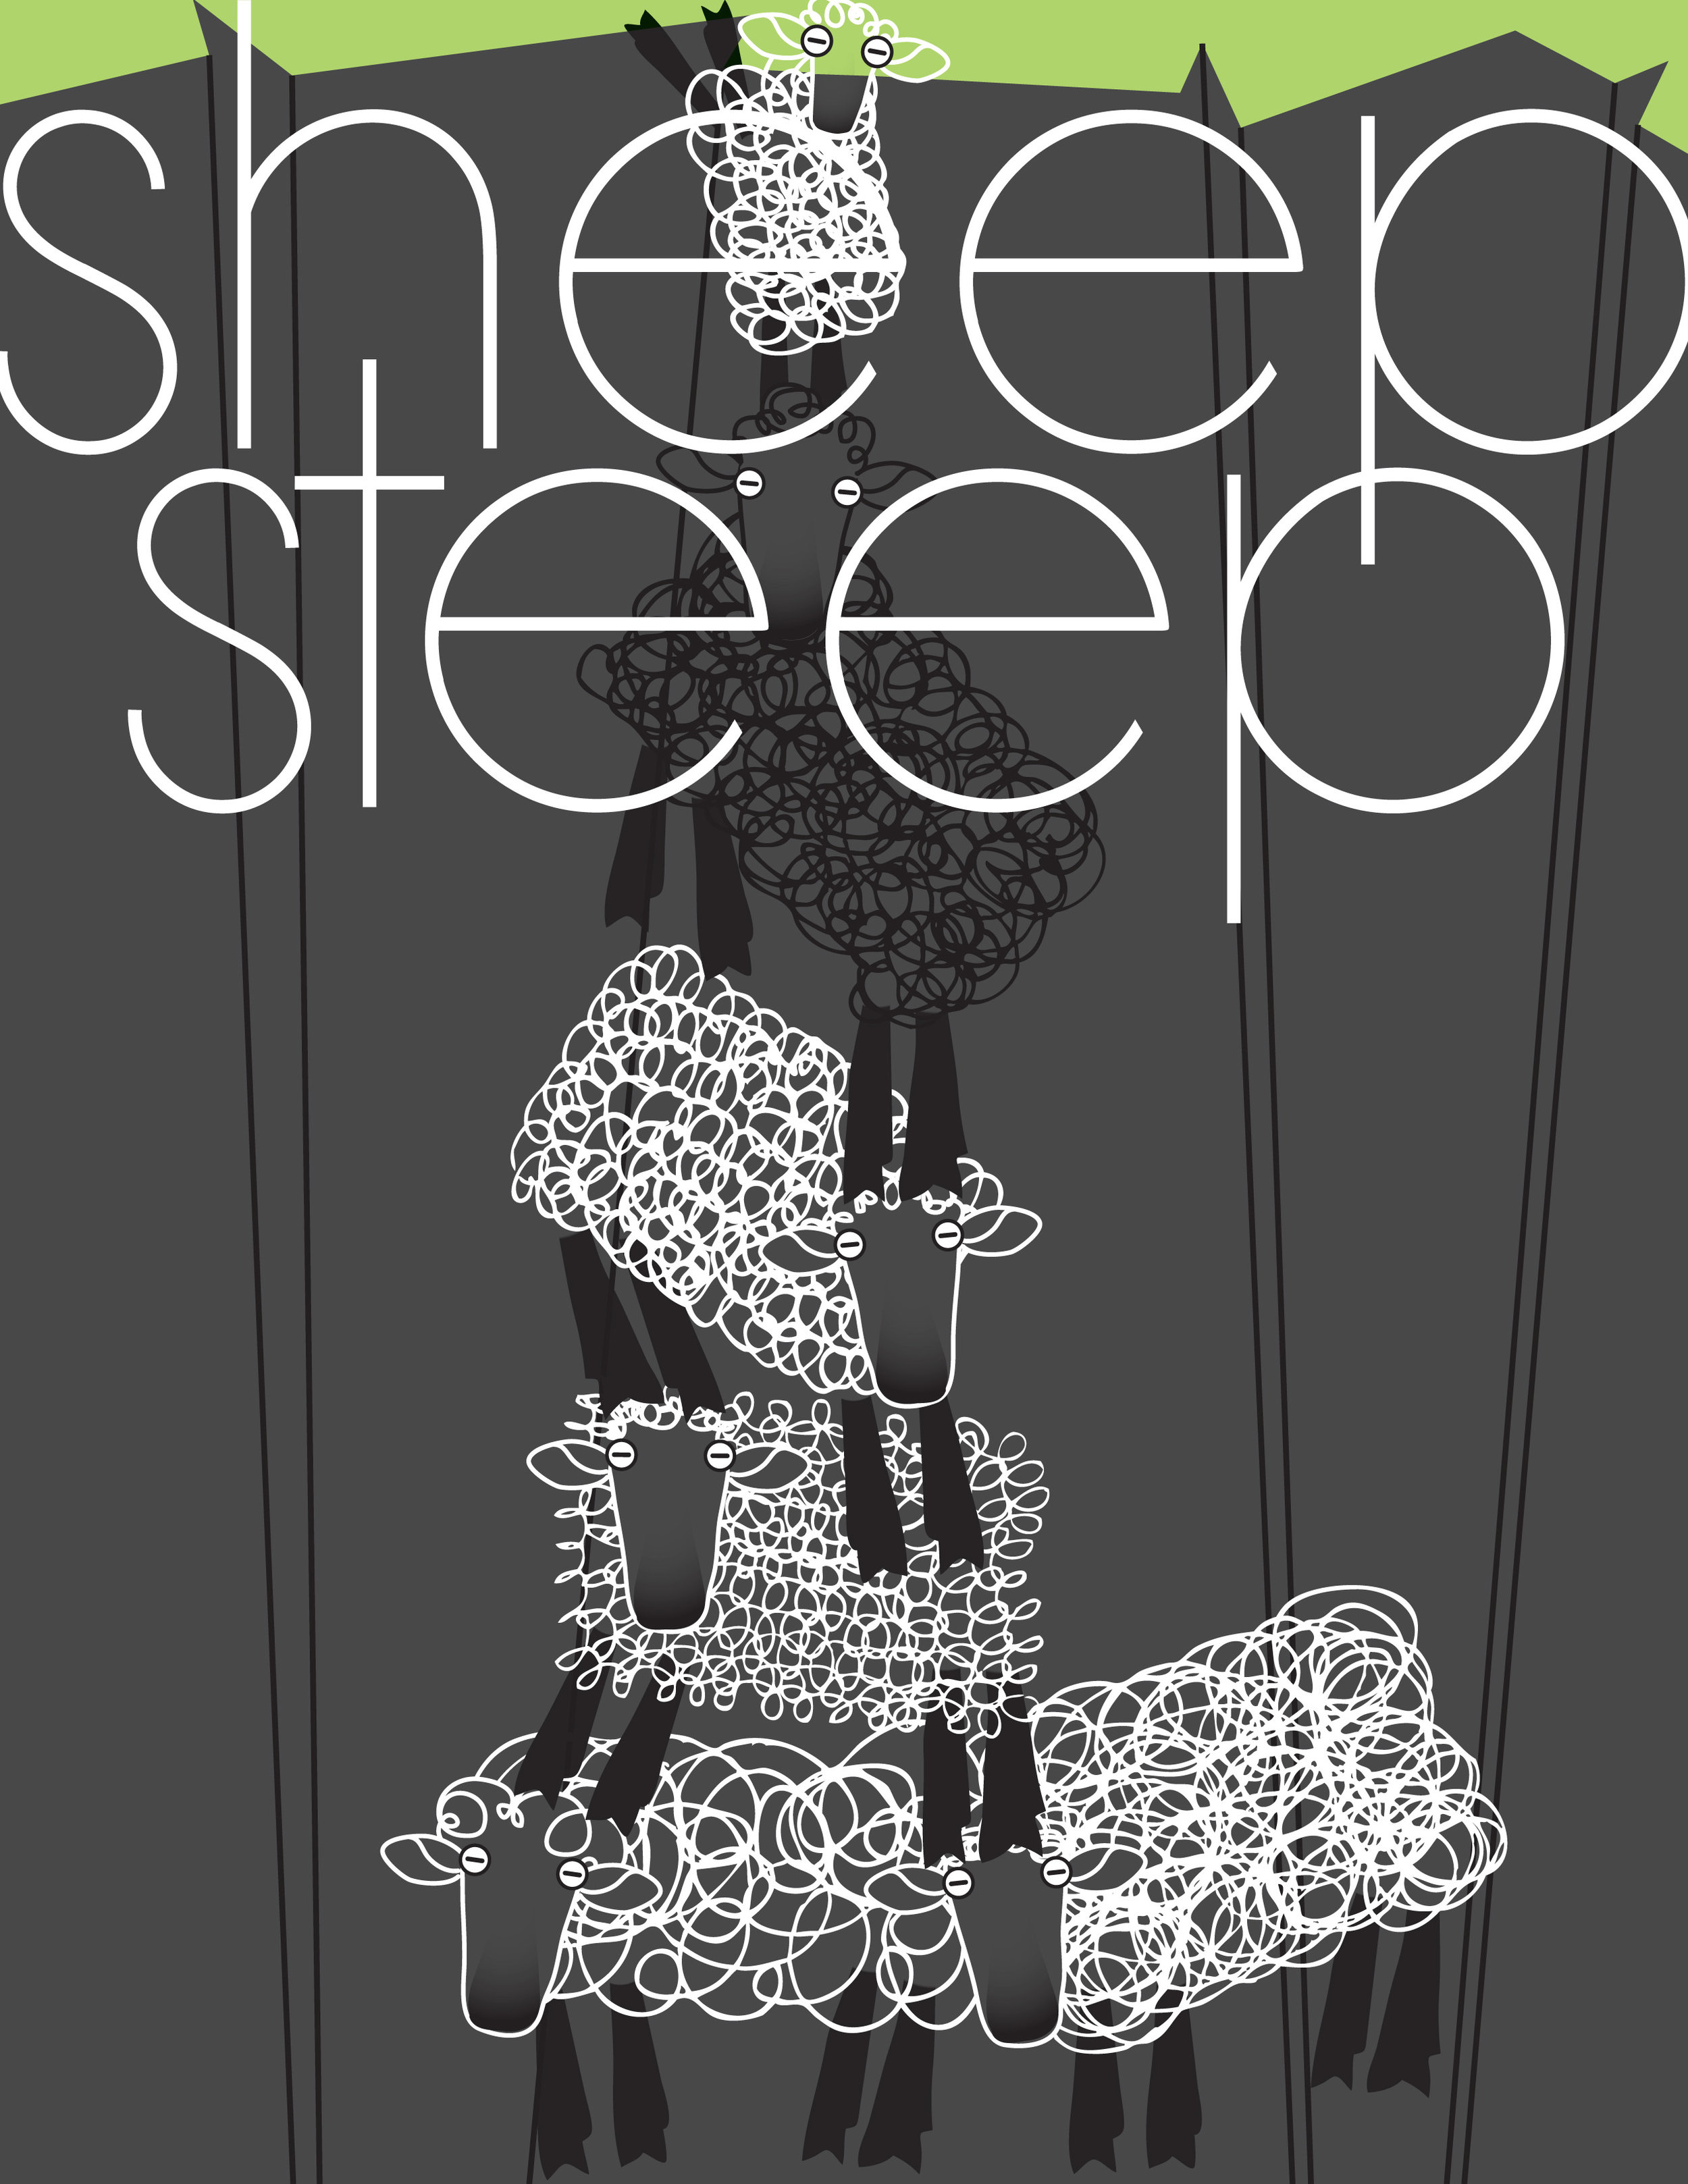 Sheep Sleep Book 2-10.jpg